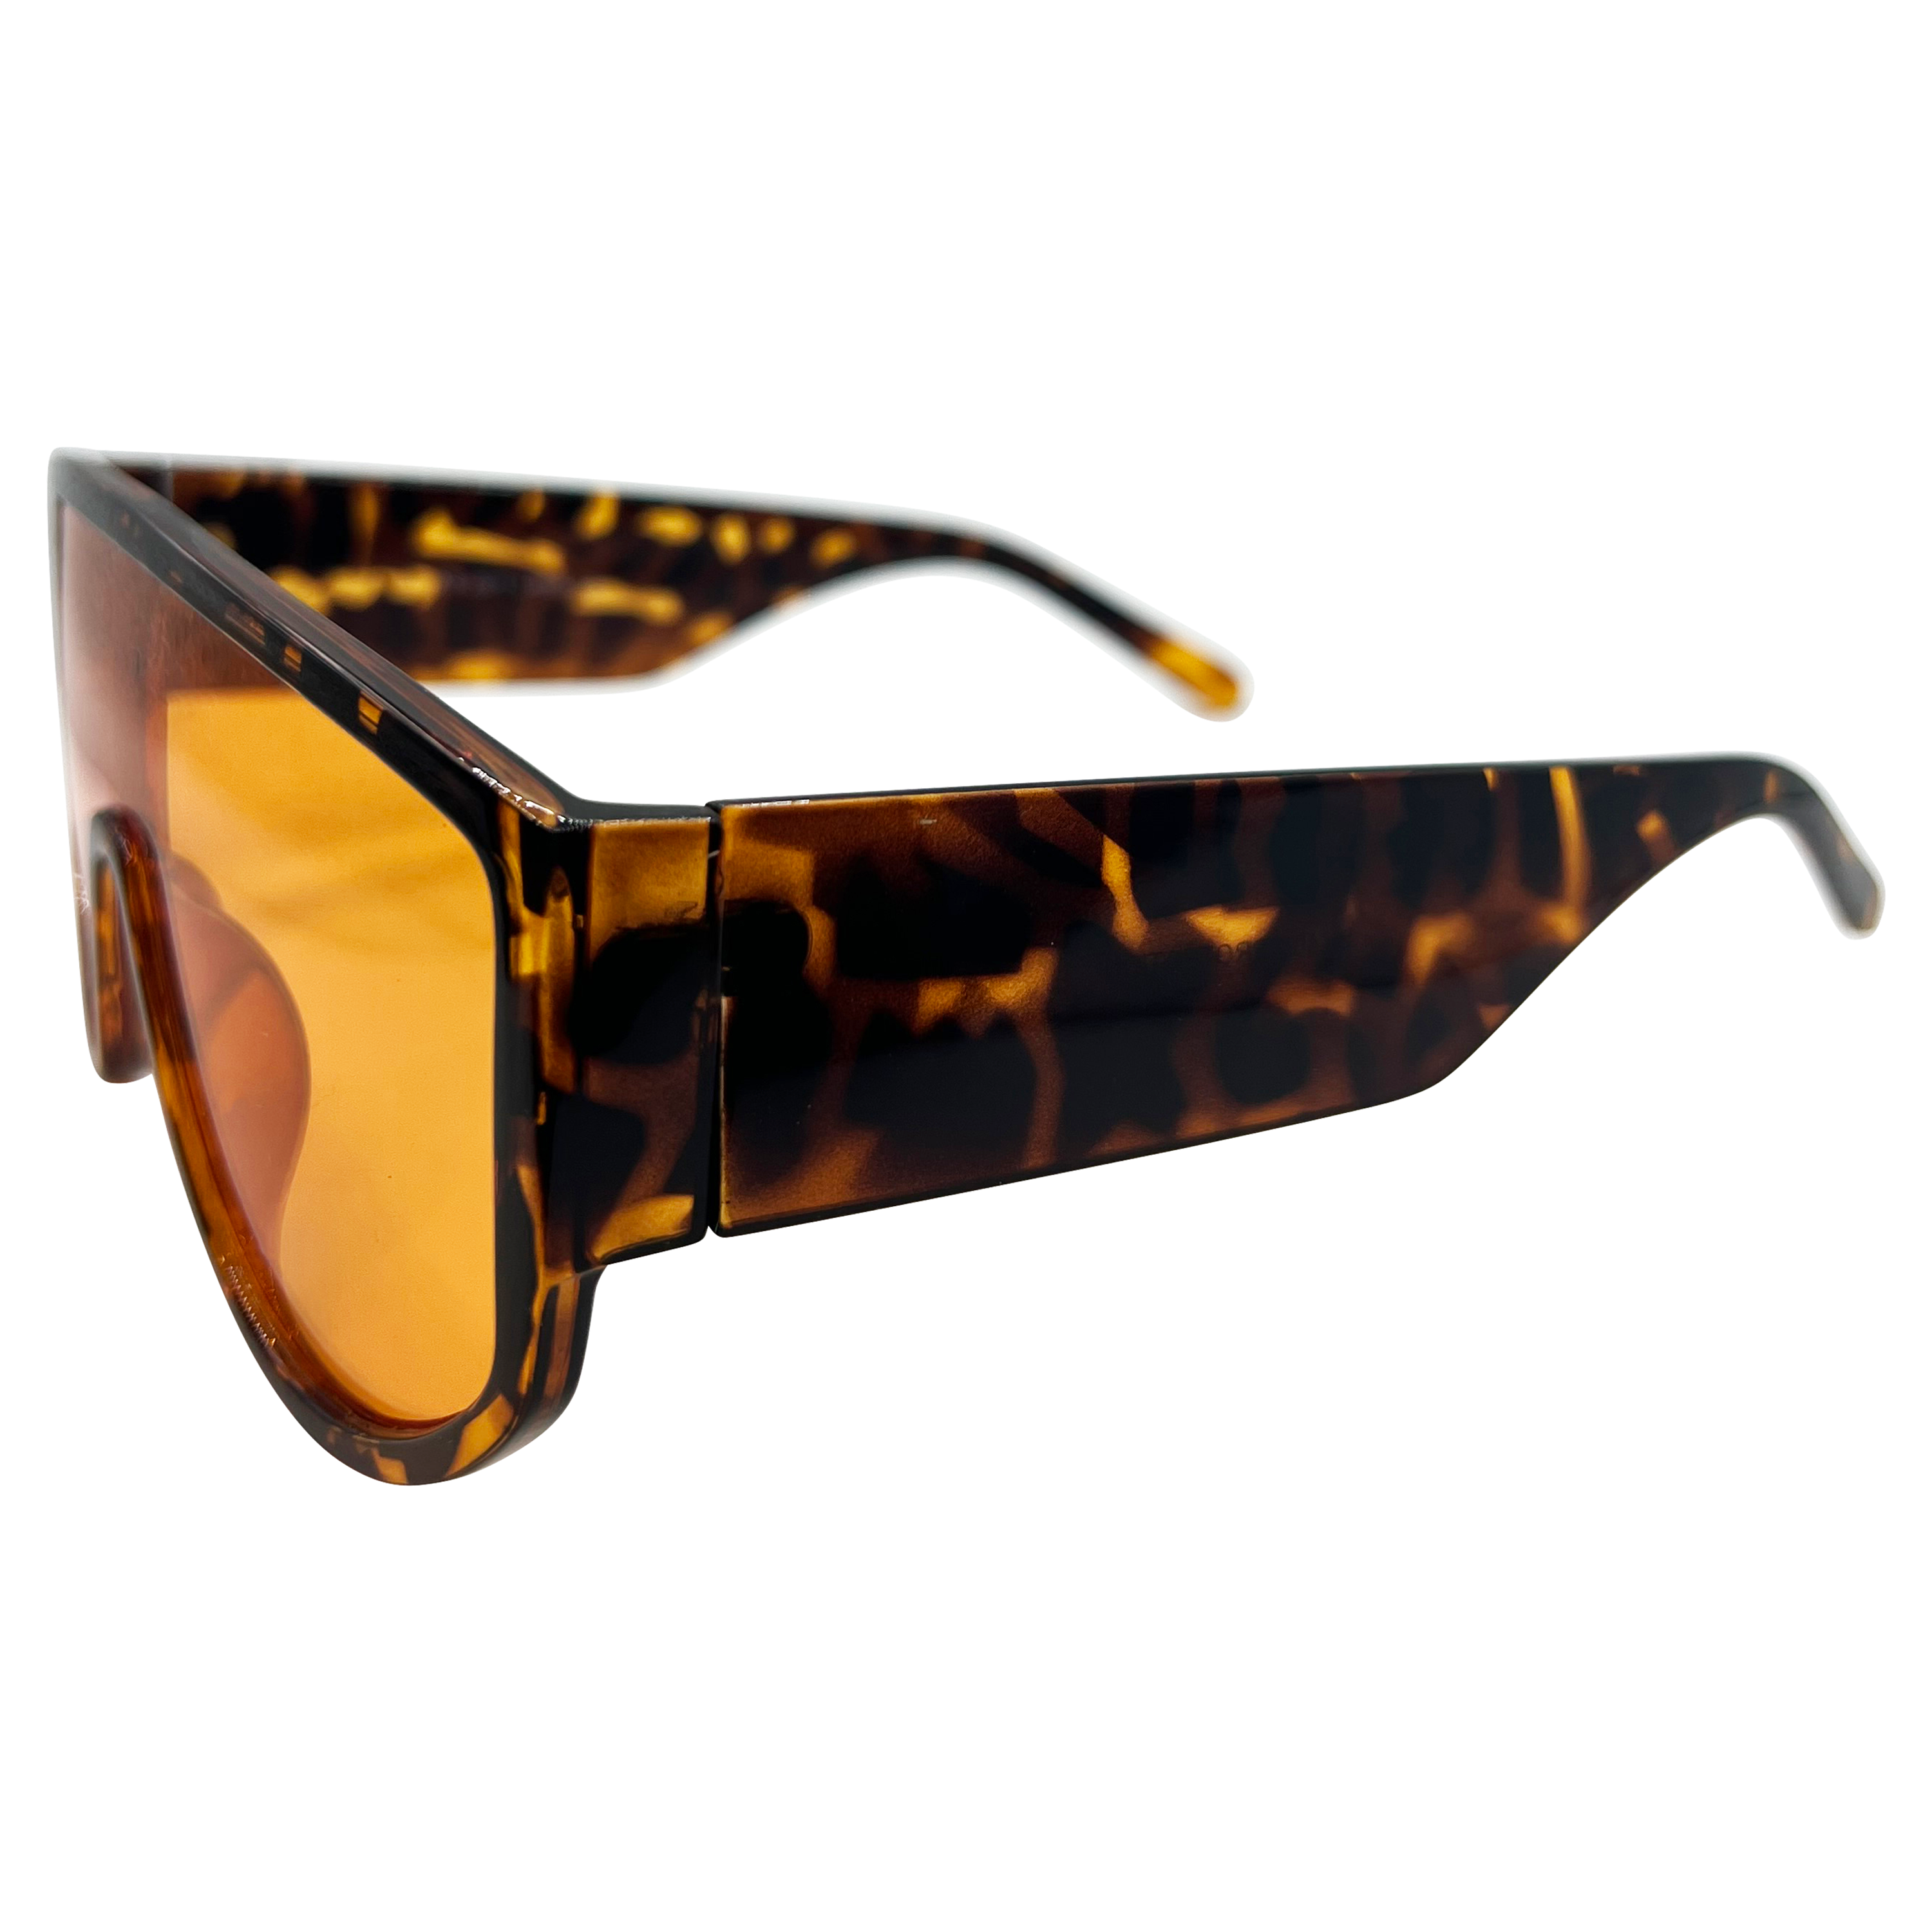 SMOKED OUT Calico/Orange Shield Sunglasses